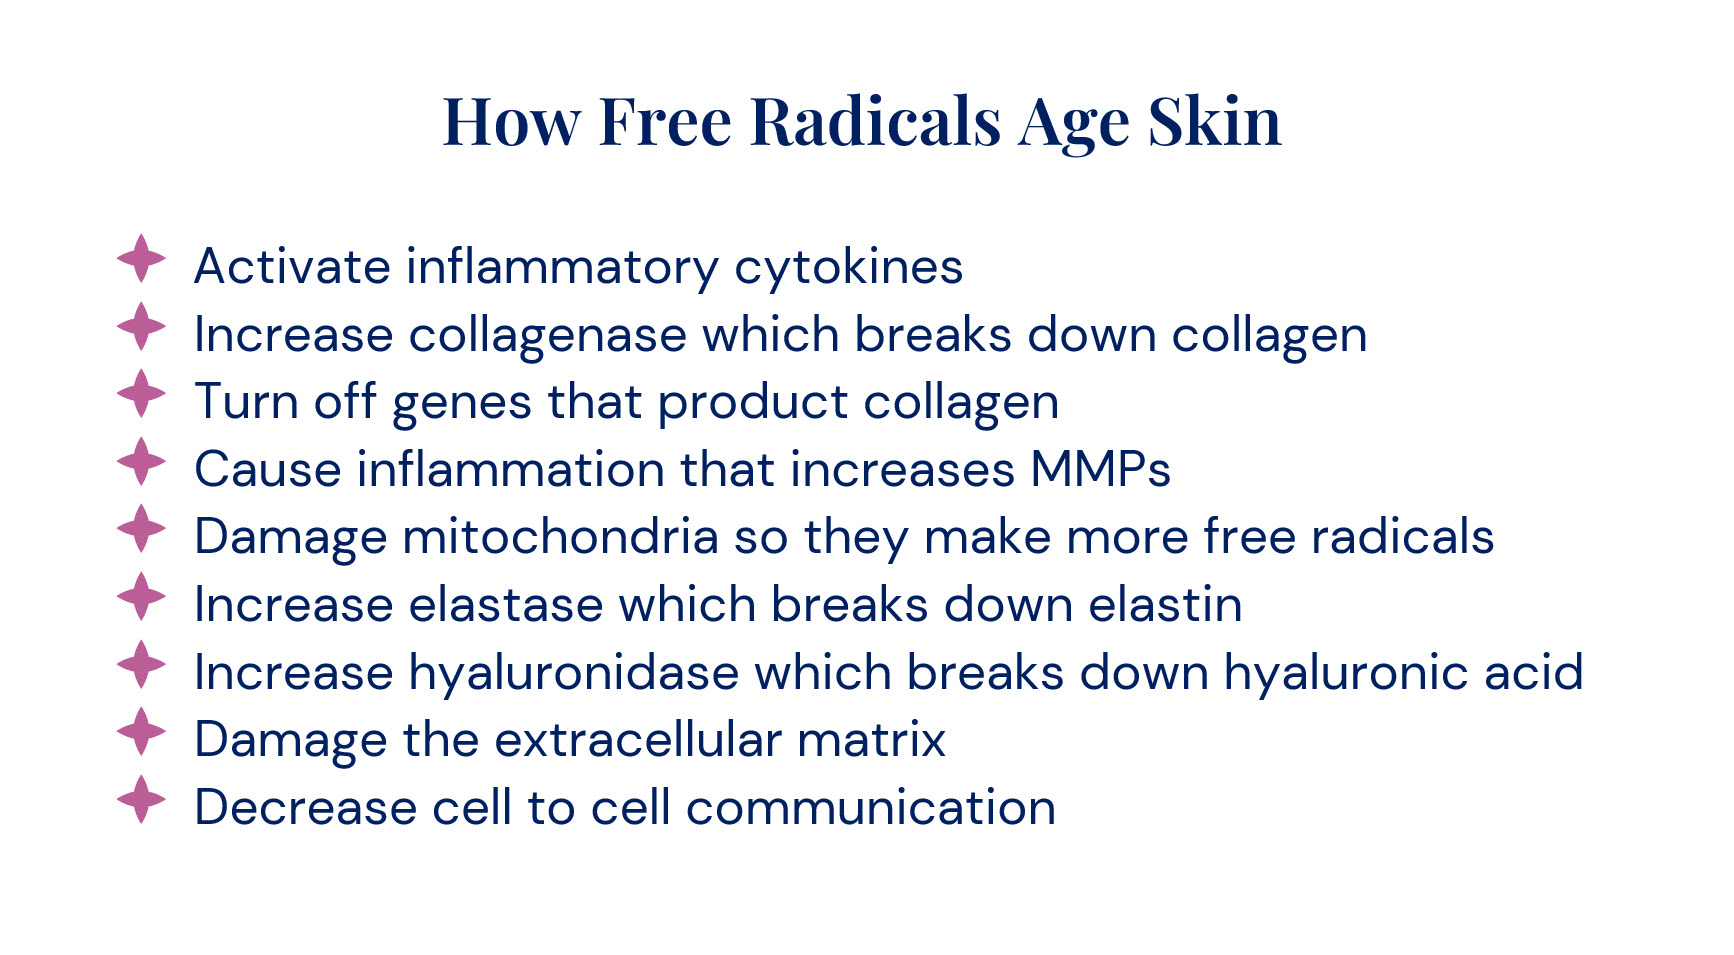 ways free radicals age skin